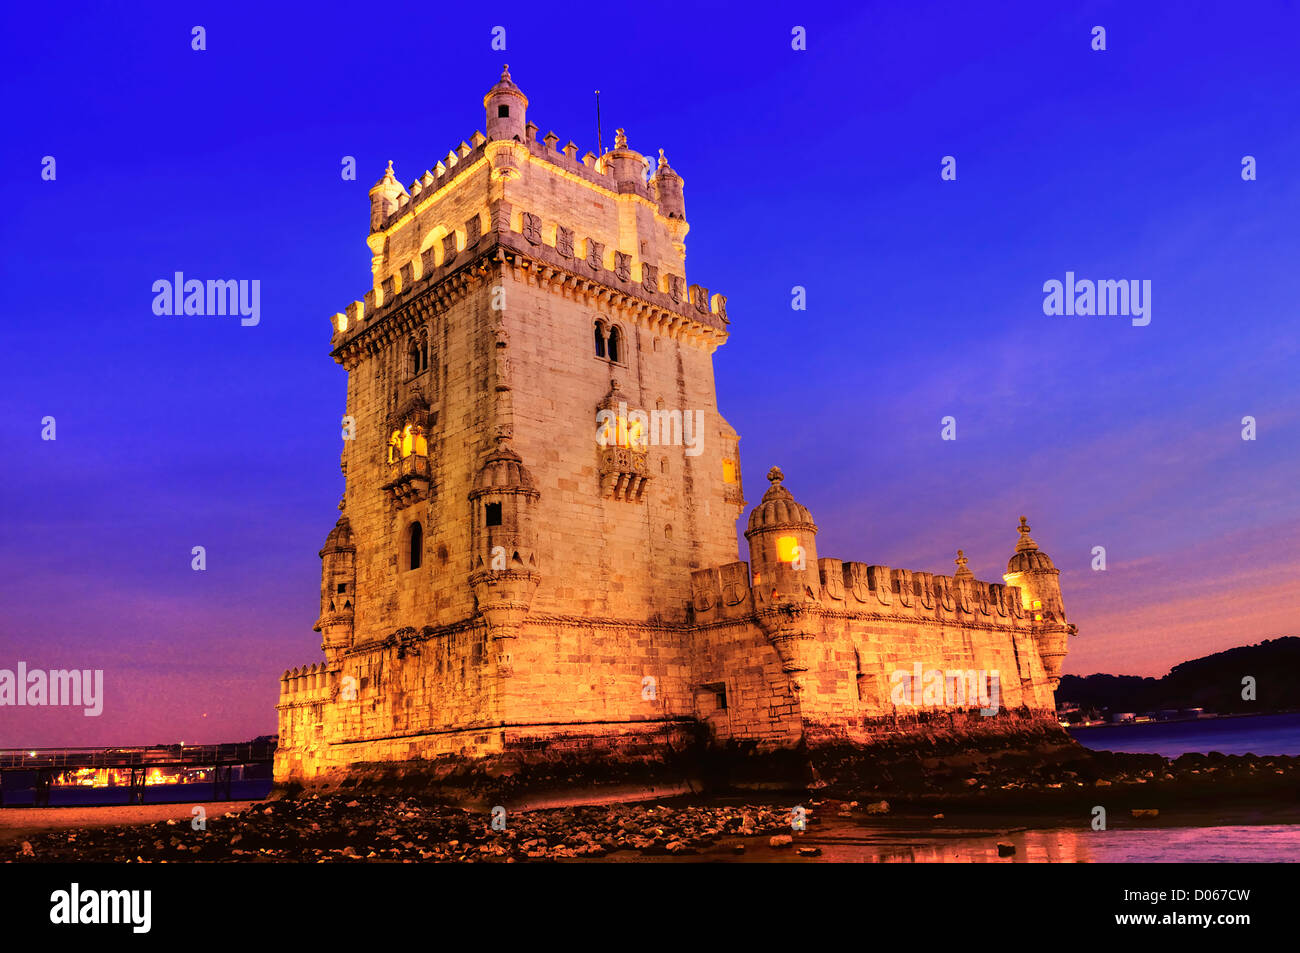 Turm von Belem in Lisbone Stadt, Portugal Stockfoto